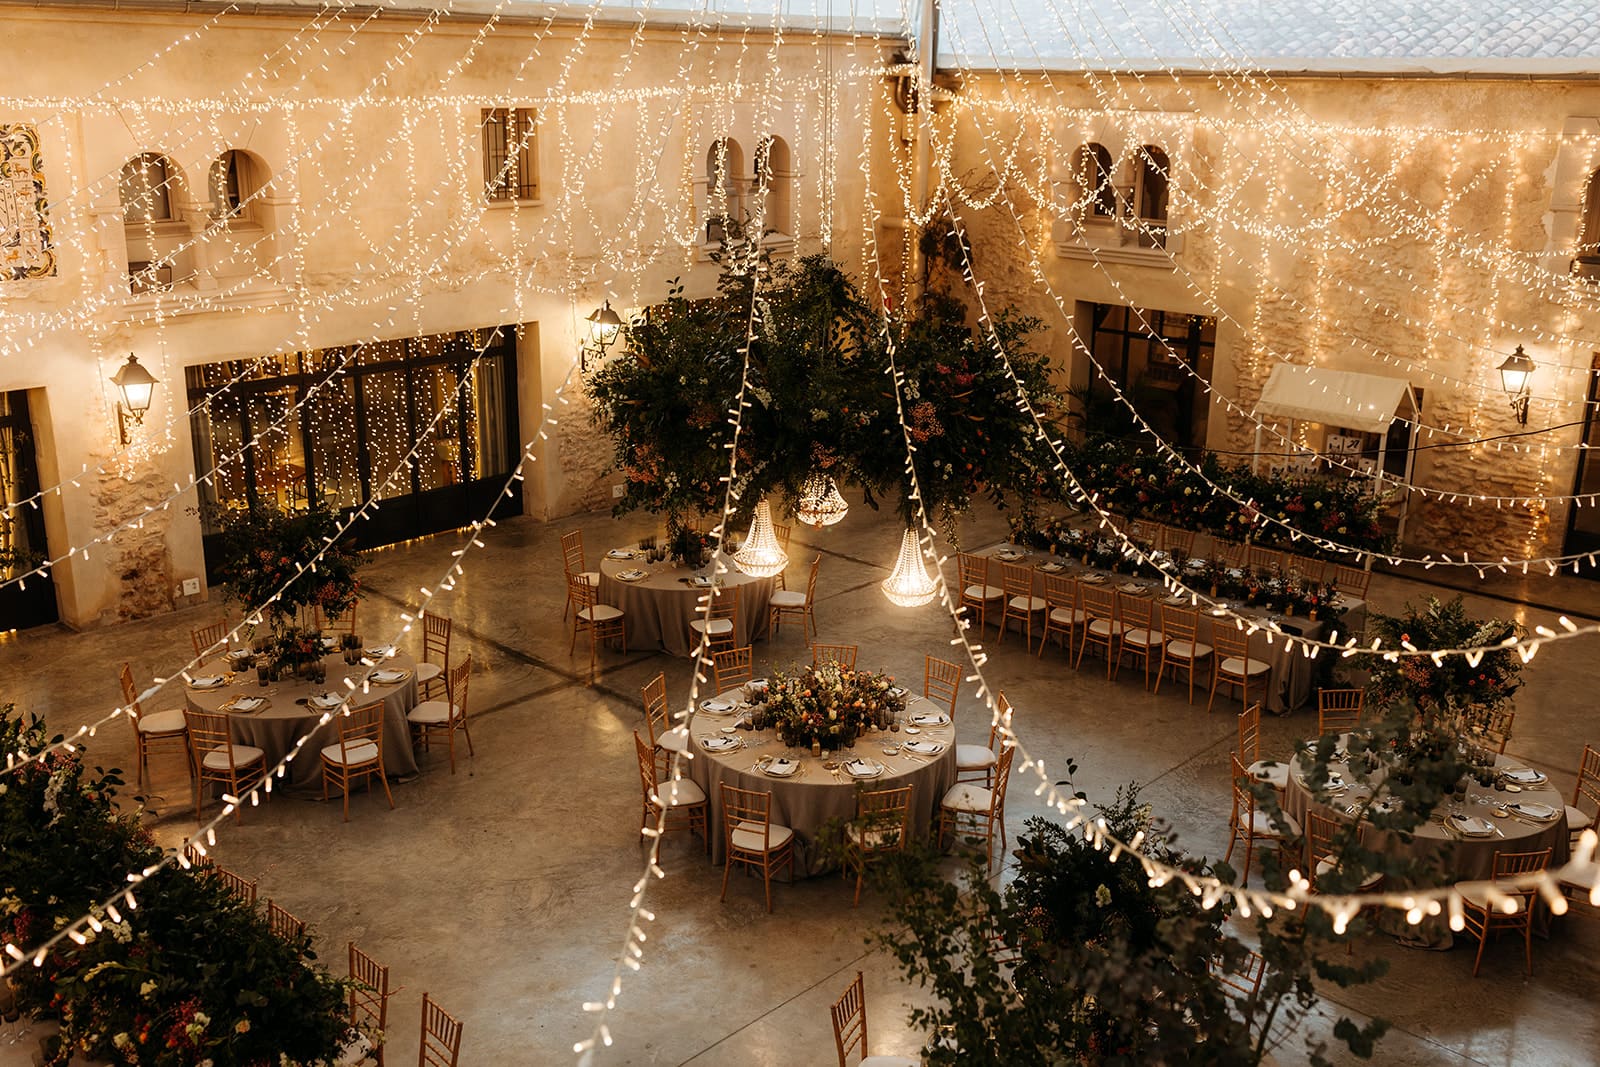 Salón de boda en Mas de Alzedo con decoración romántica de luces colgantes y decoración de mesas con flores naturales.